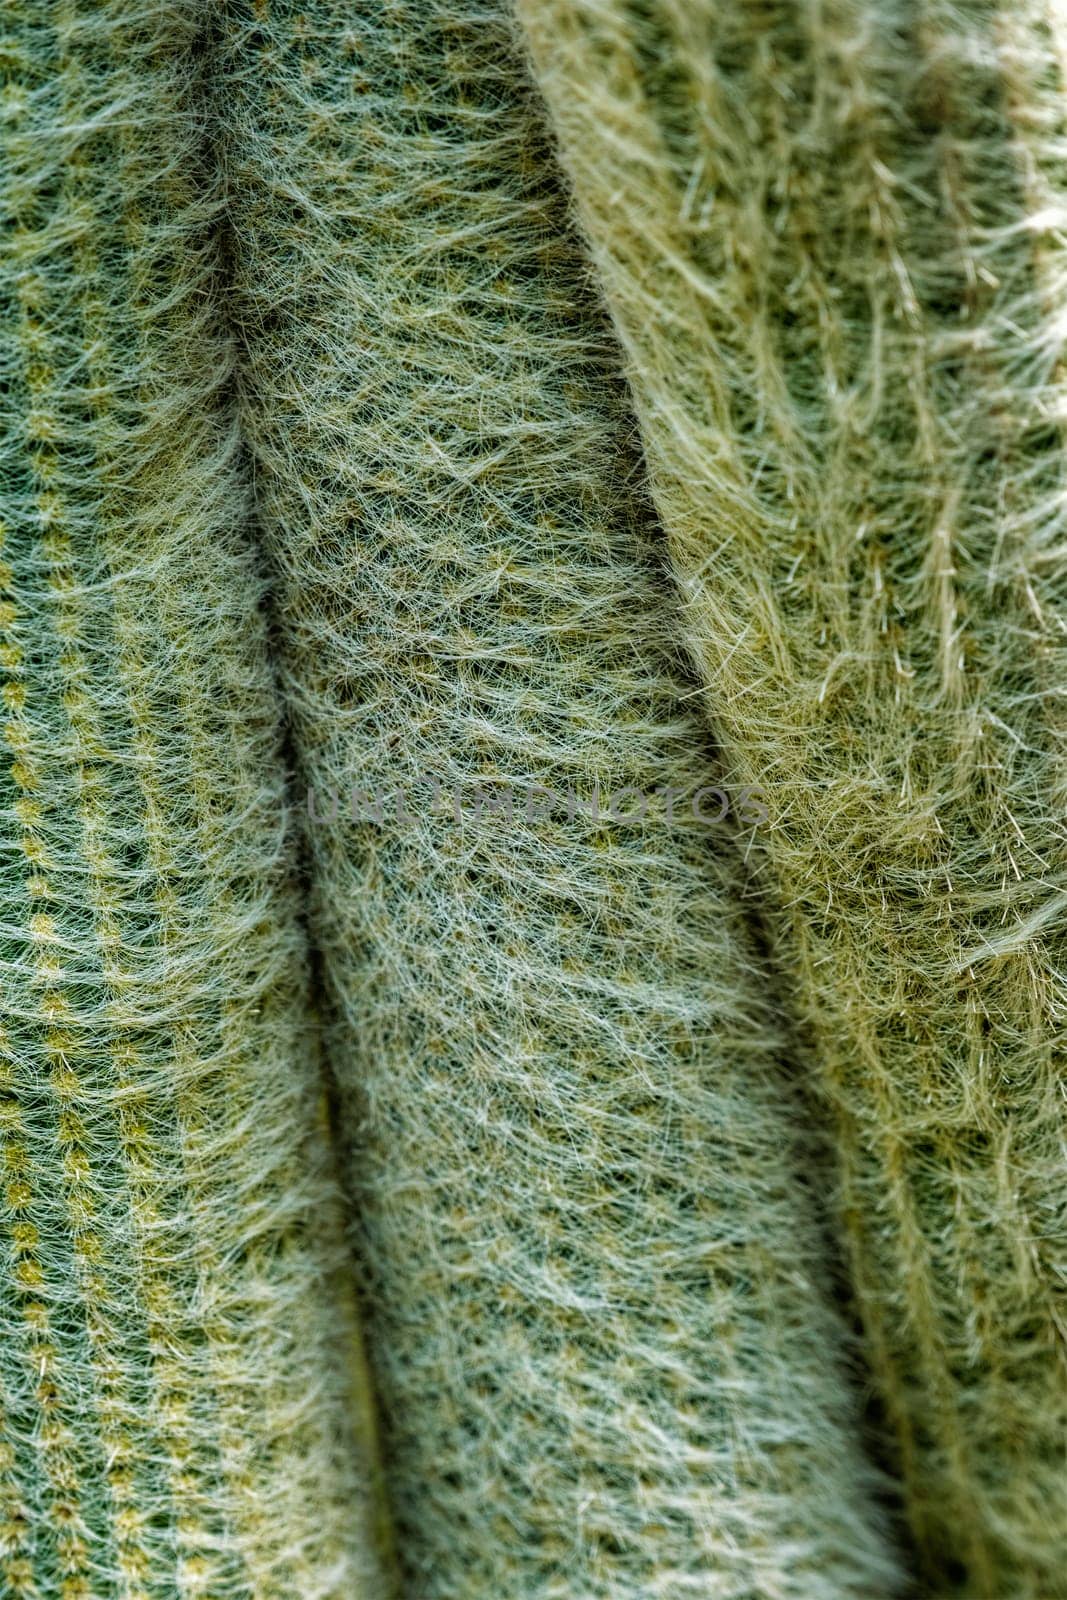 Cephalocereus senilis the old man cactus close up by dimol